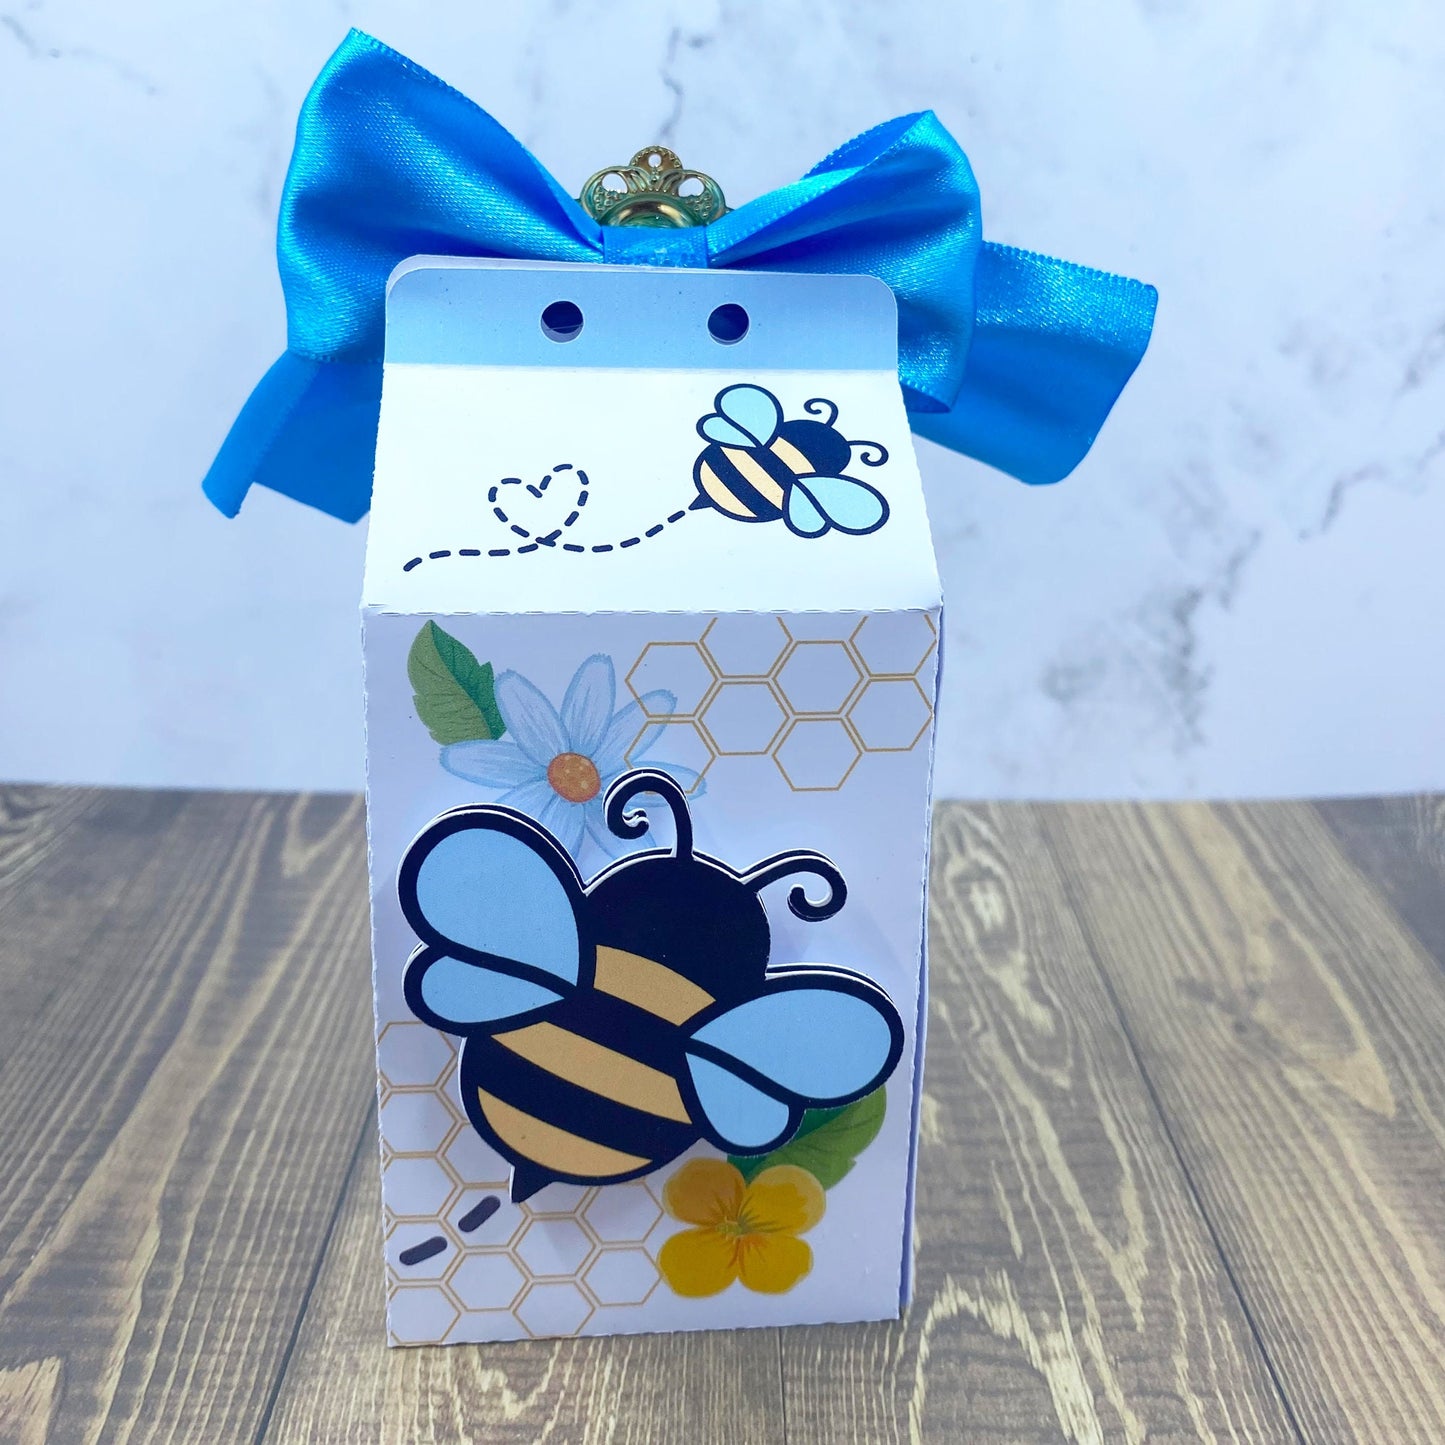 Bee Party Decor - Bee Favor Decorations - Bee Favor Boxes - Bumble Bee Favor Box - Bee Party supplies - Bumble Bee Decor - Honeycomb Decor